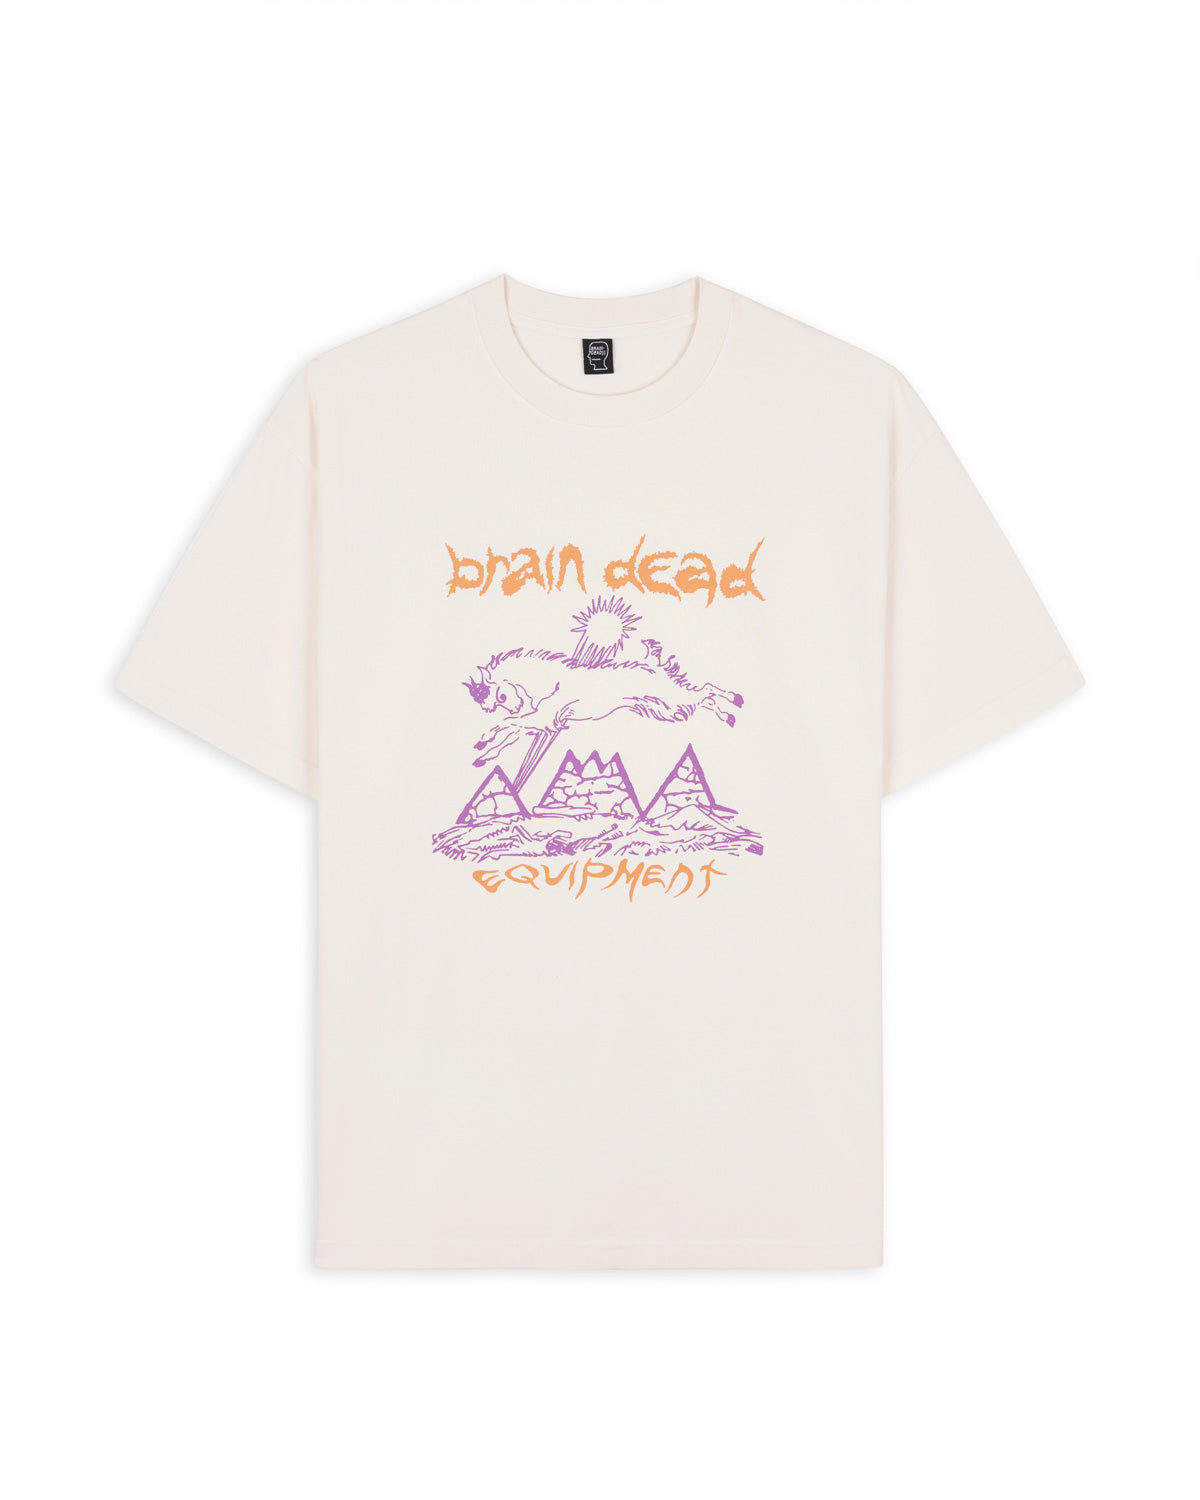 Brain Dead x Belle & Sebastian Boy With The Arab Strap T-Shirt (Tokyo